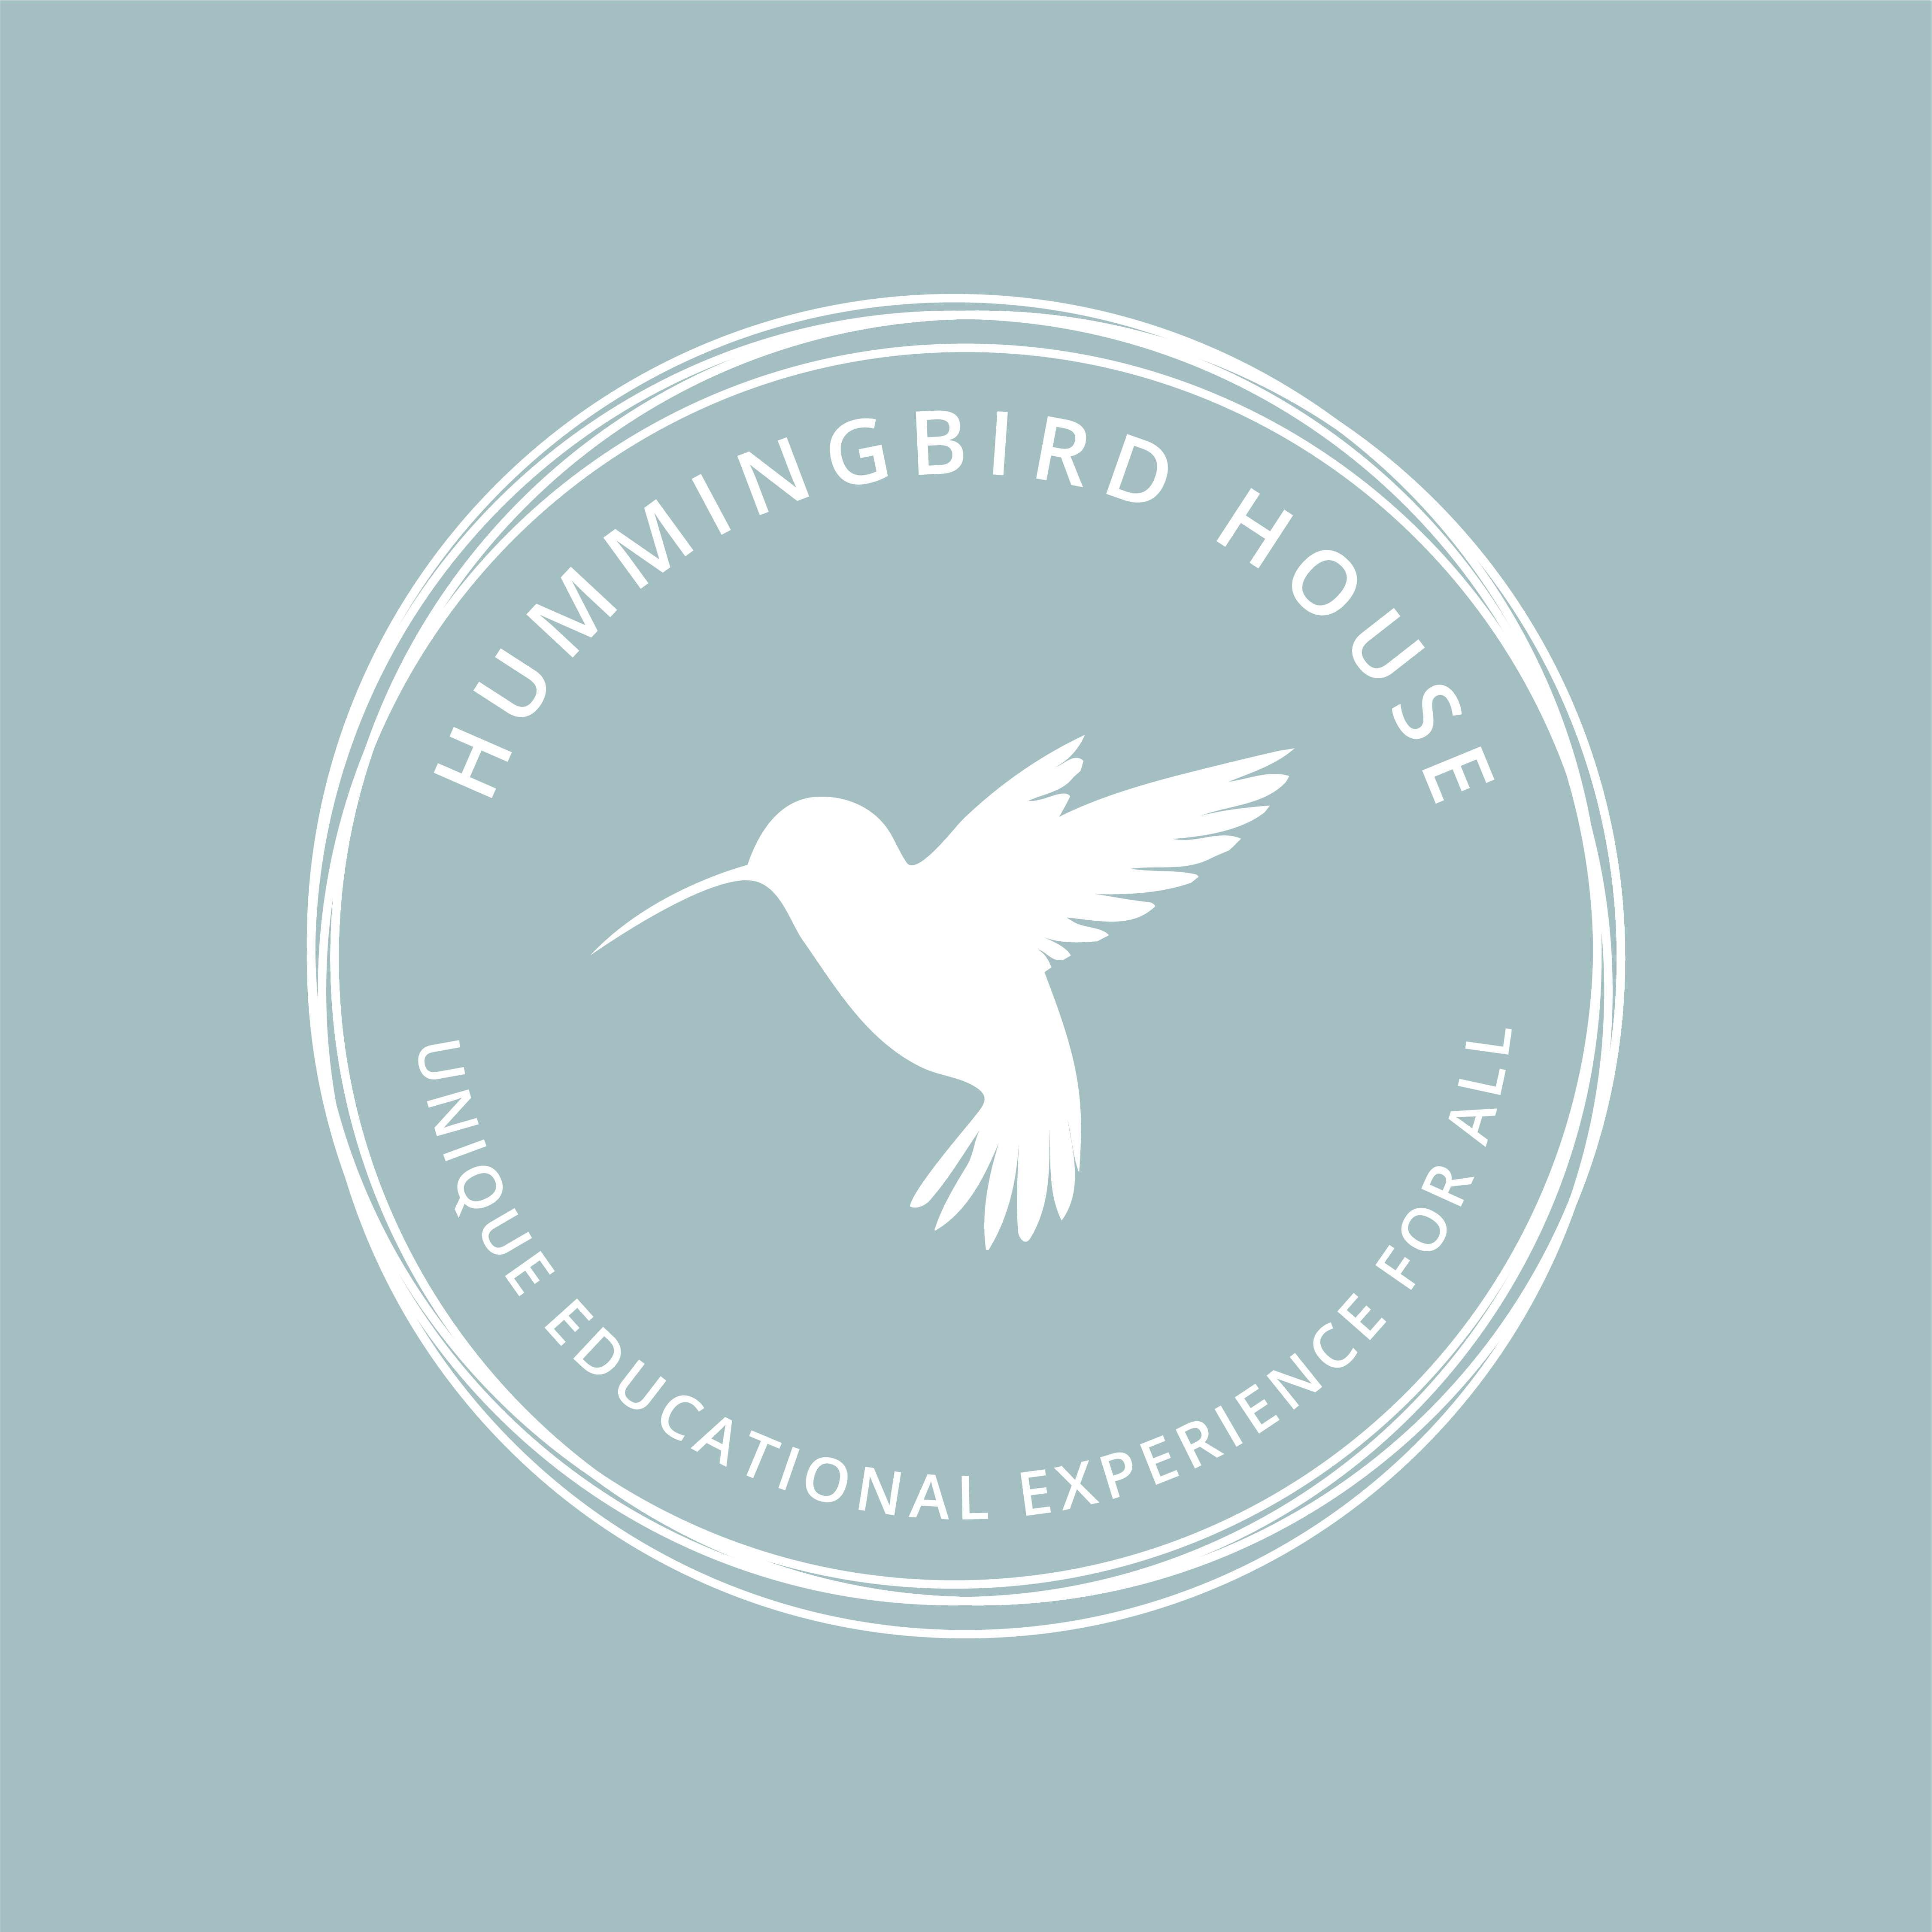 Hummingbird House logo